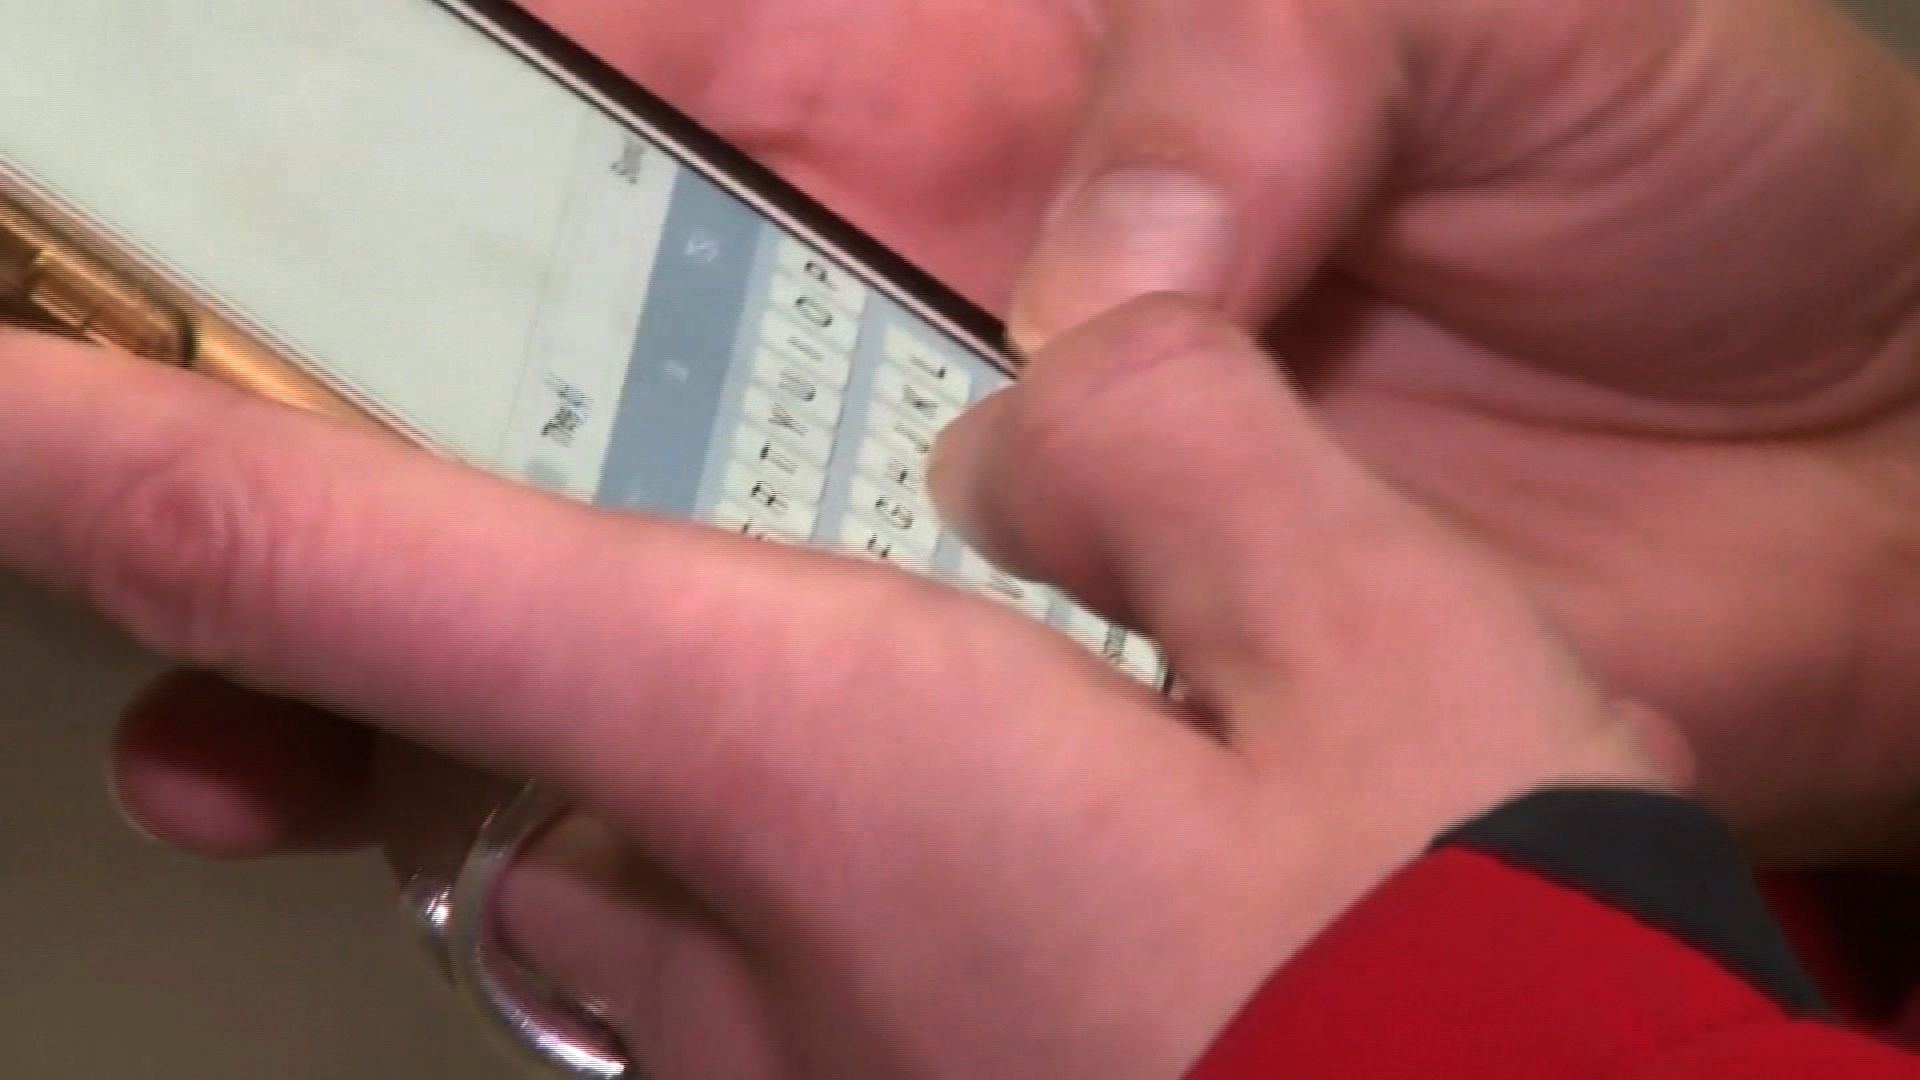 Colorado sexting scandal: High school faces felony investigation | CNN